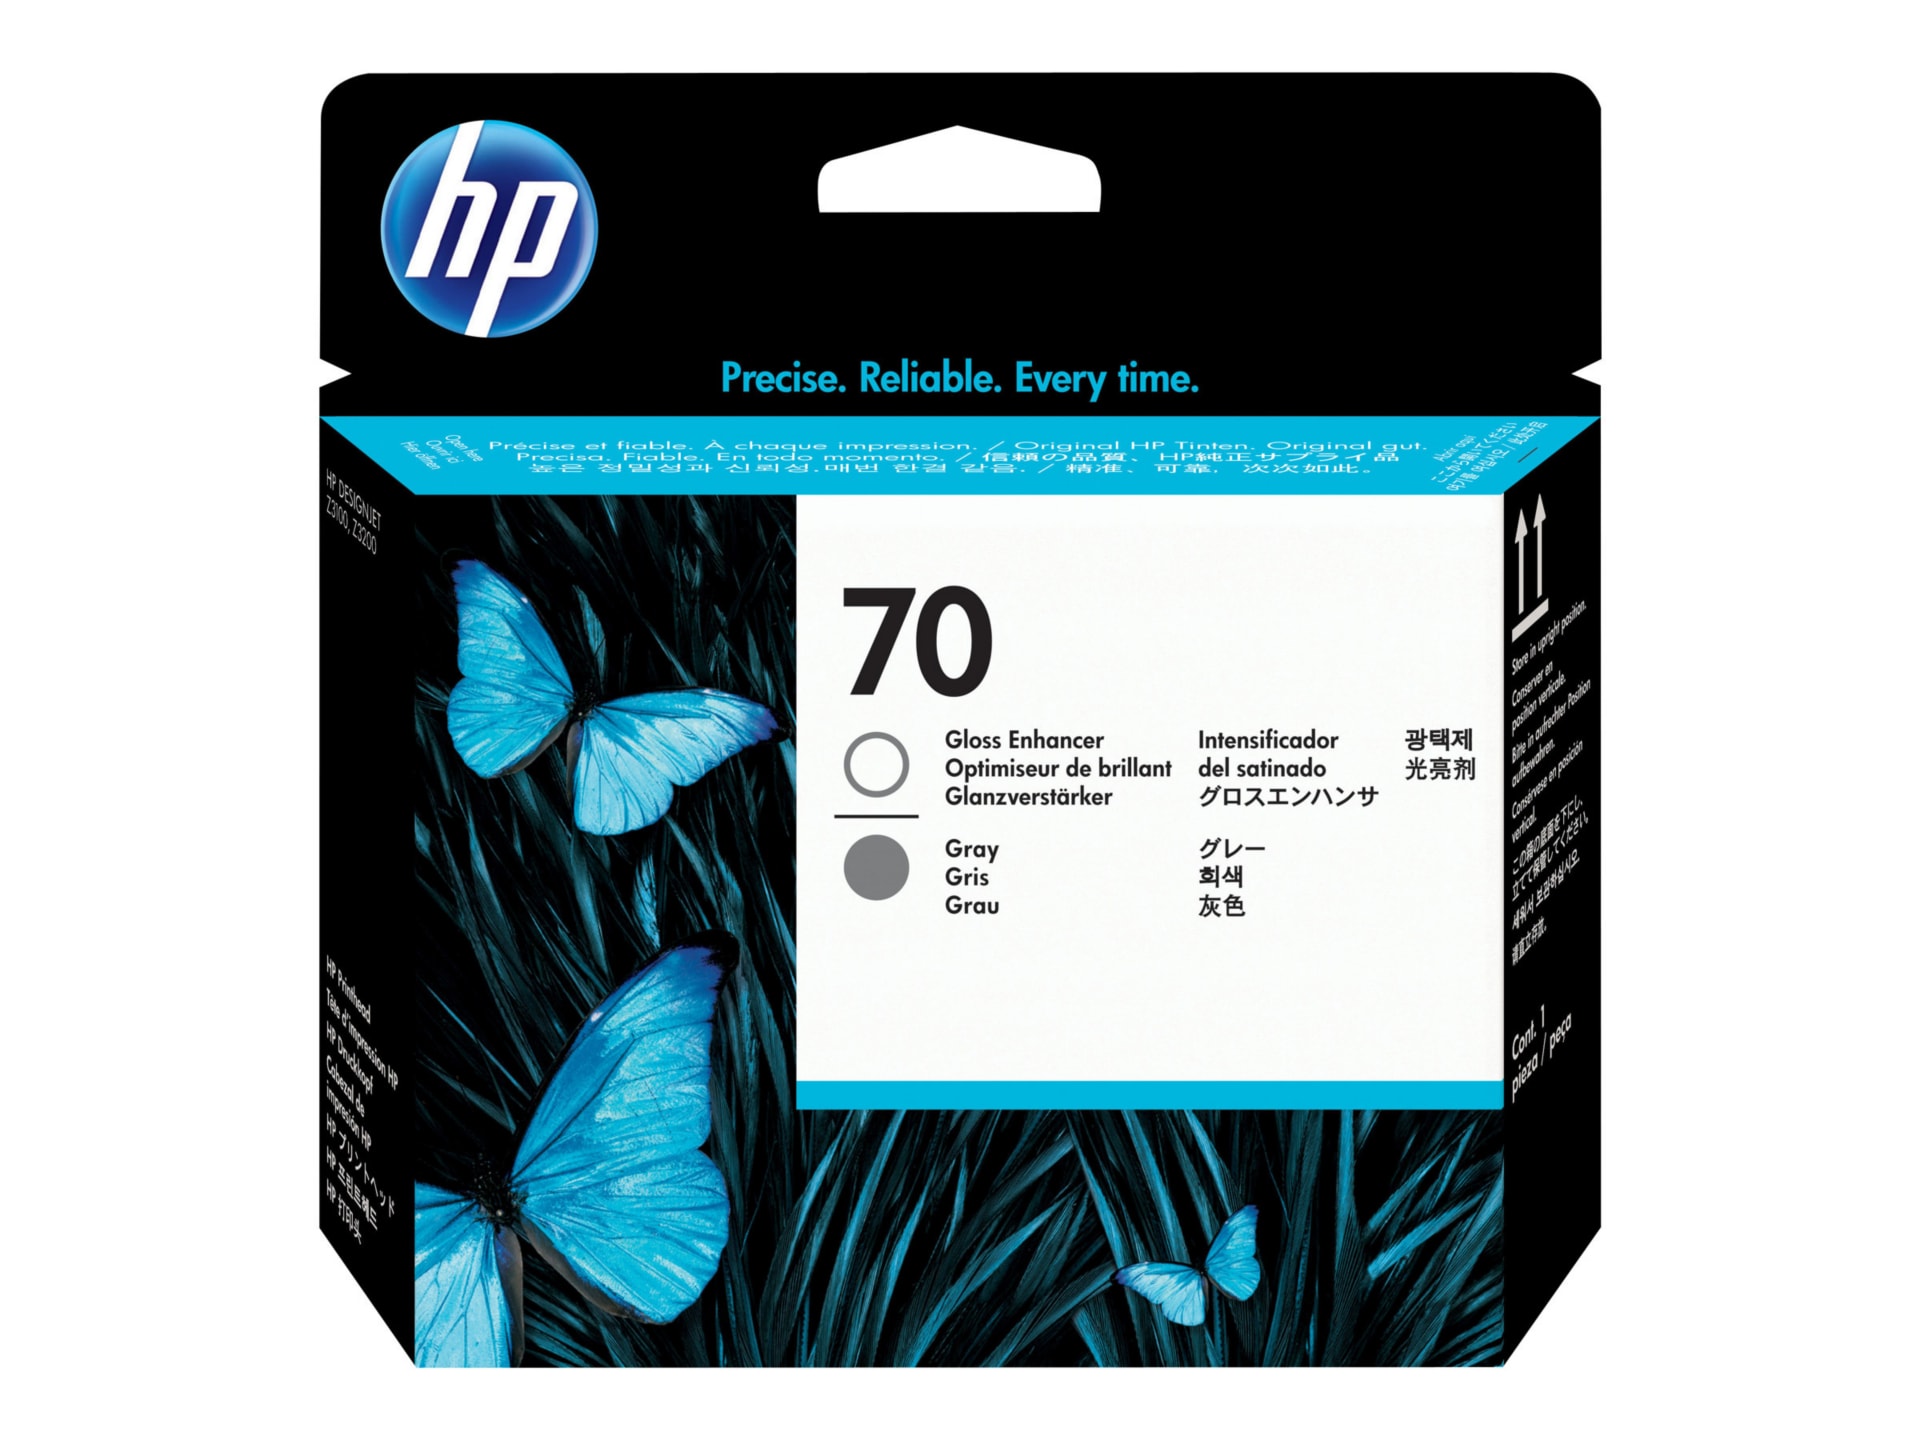 HP 70 Gloss Enhanced and Gray Printhead